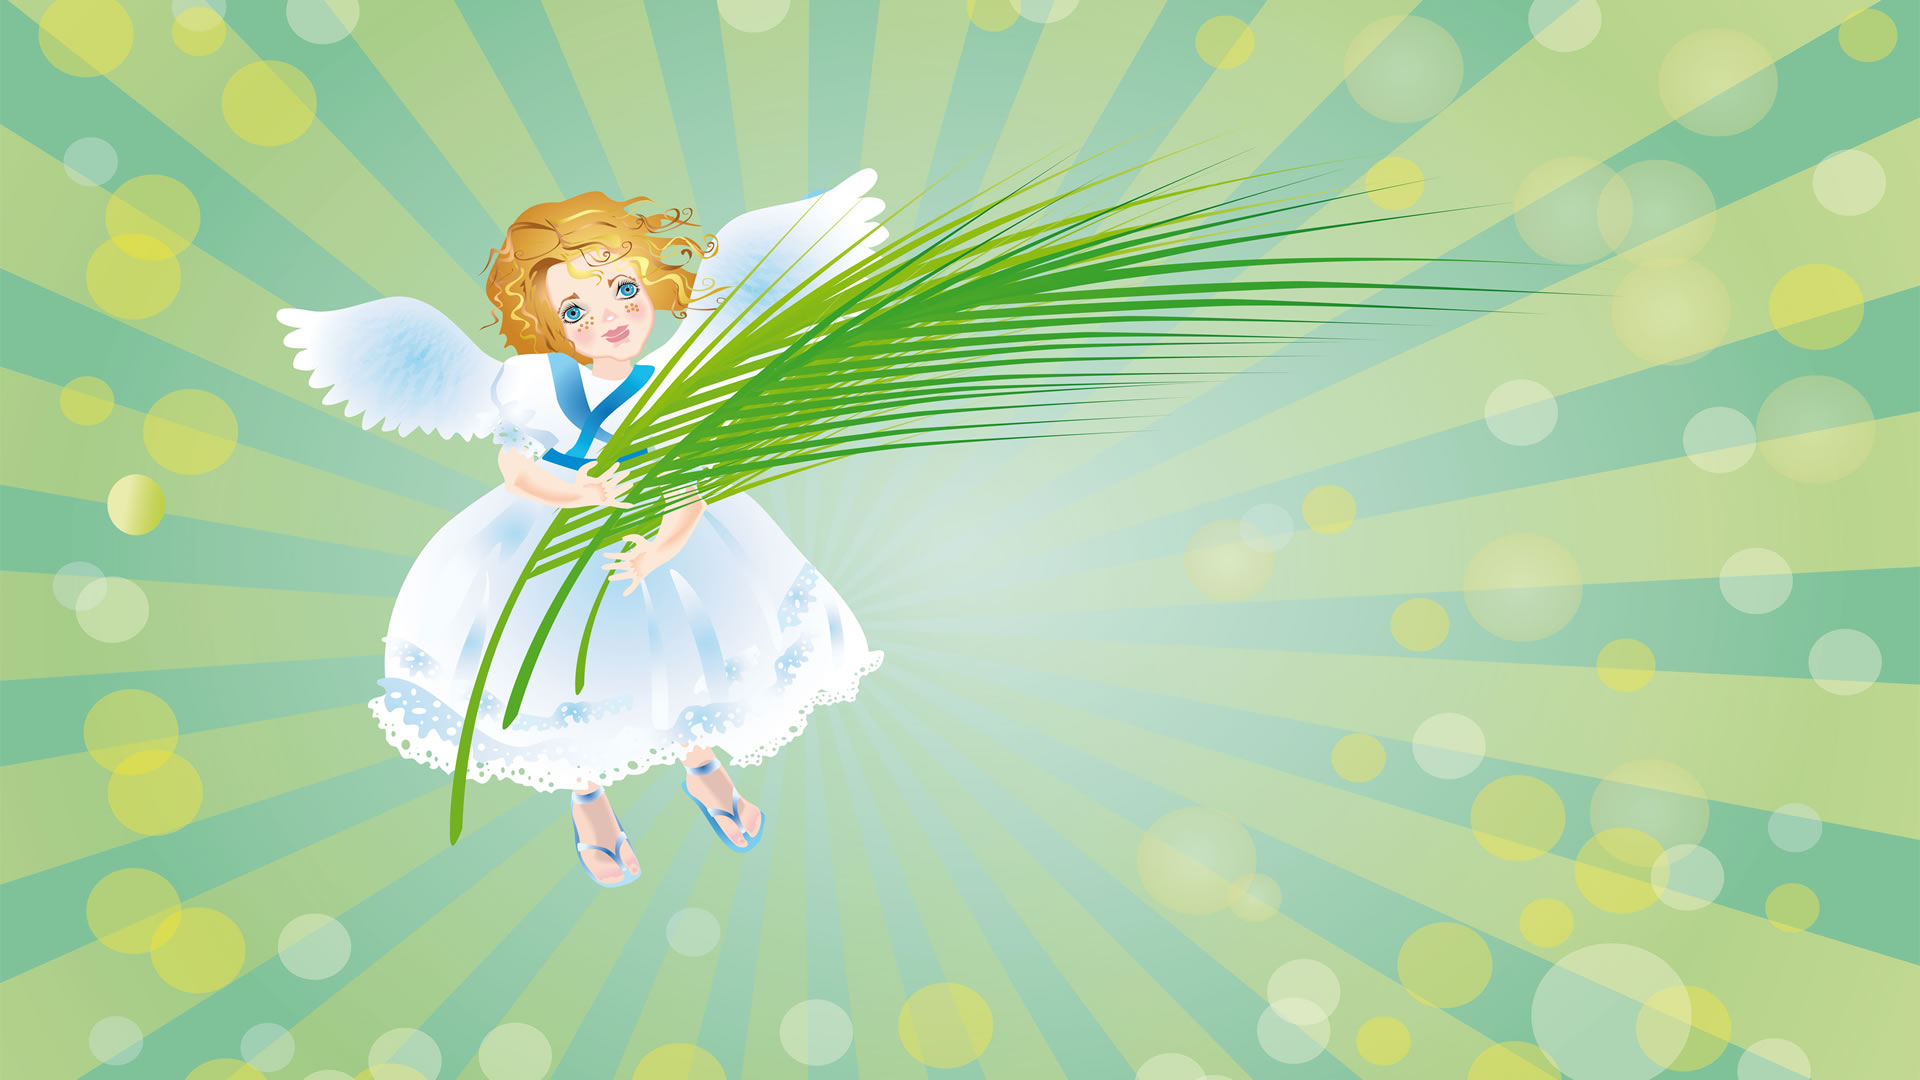 Easter Fairy - Seasonal Wallpaper Image featuring Easter